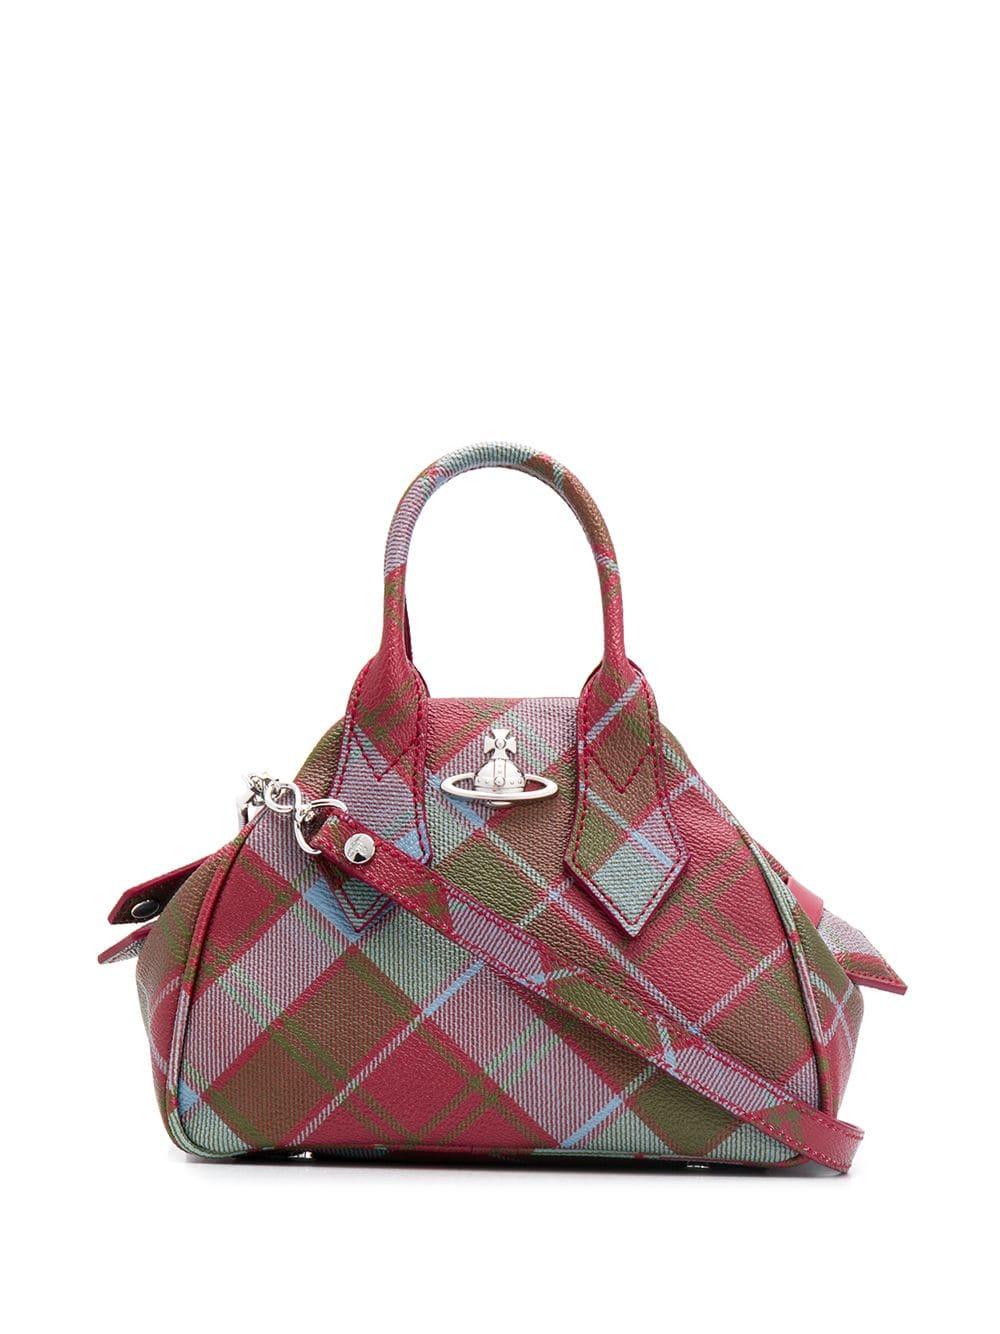 Vivienne Westwood Leather Tartan Mini Bag in Red - Lyst